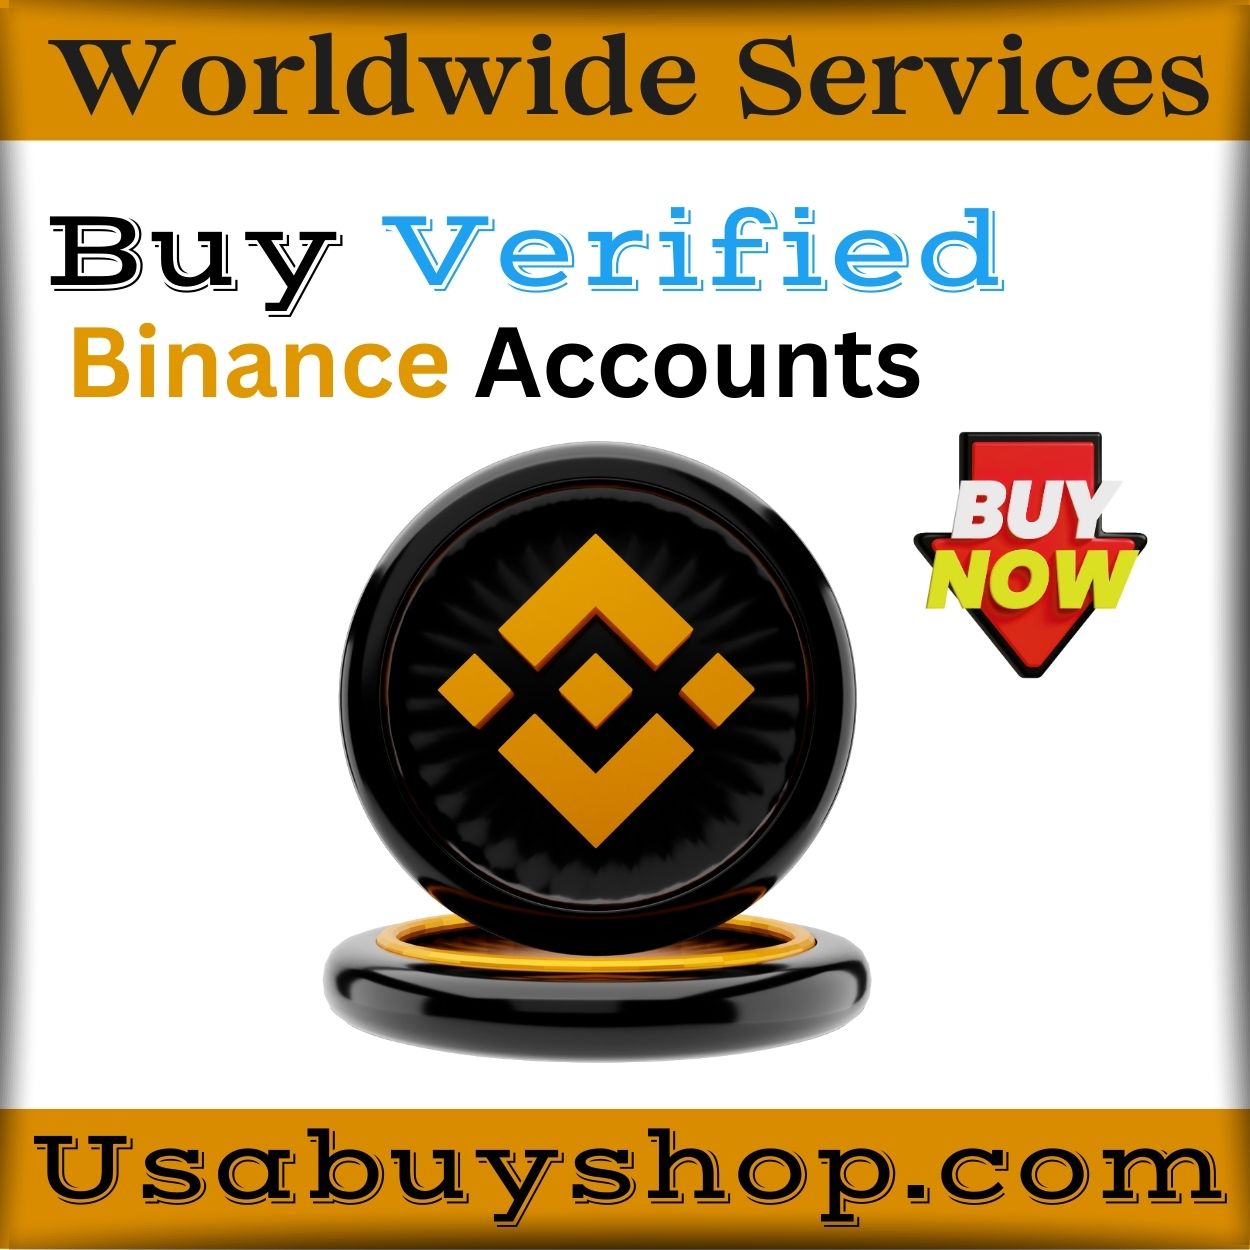 Buy Verified Binance Accounts - USABUYSHOP